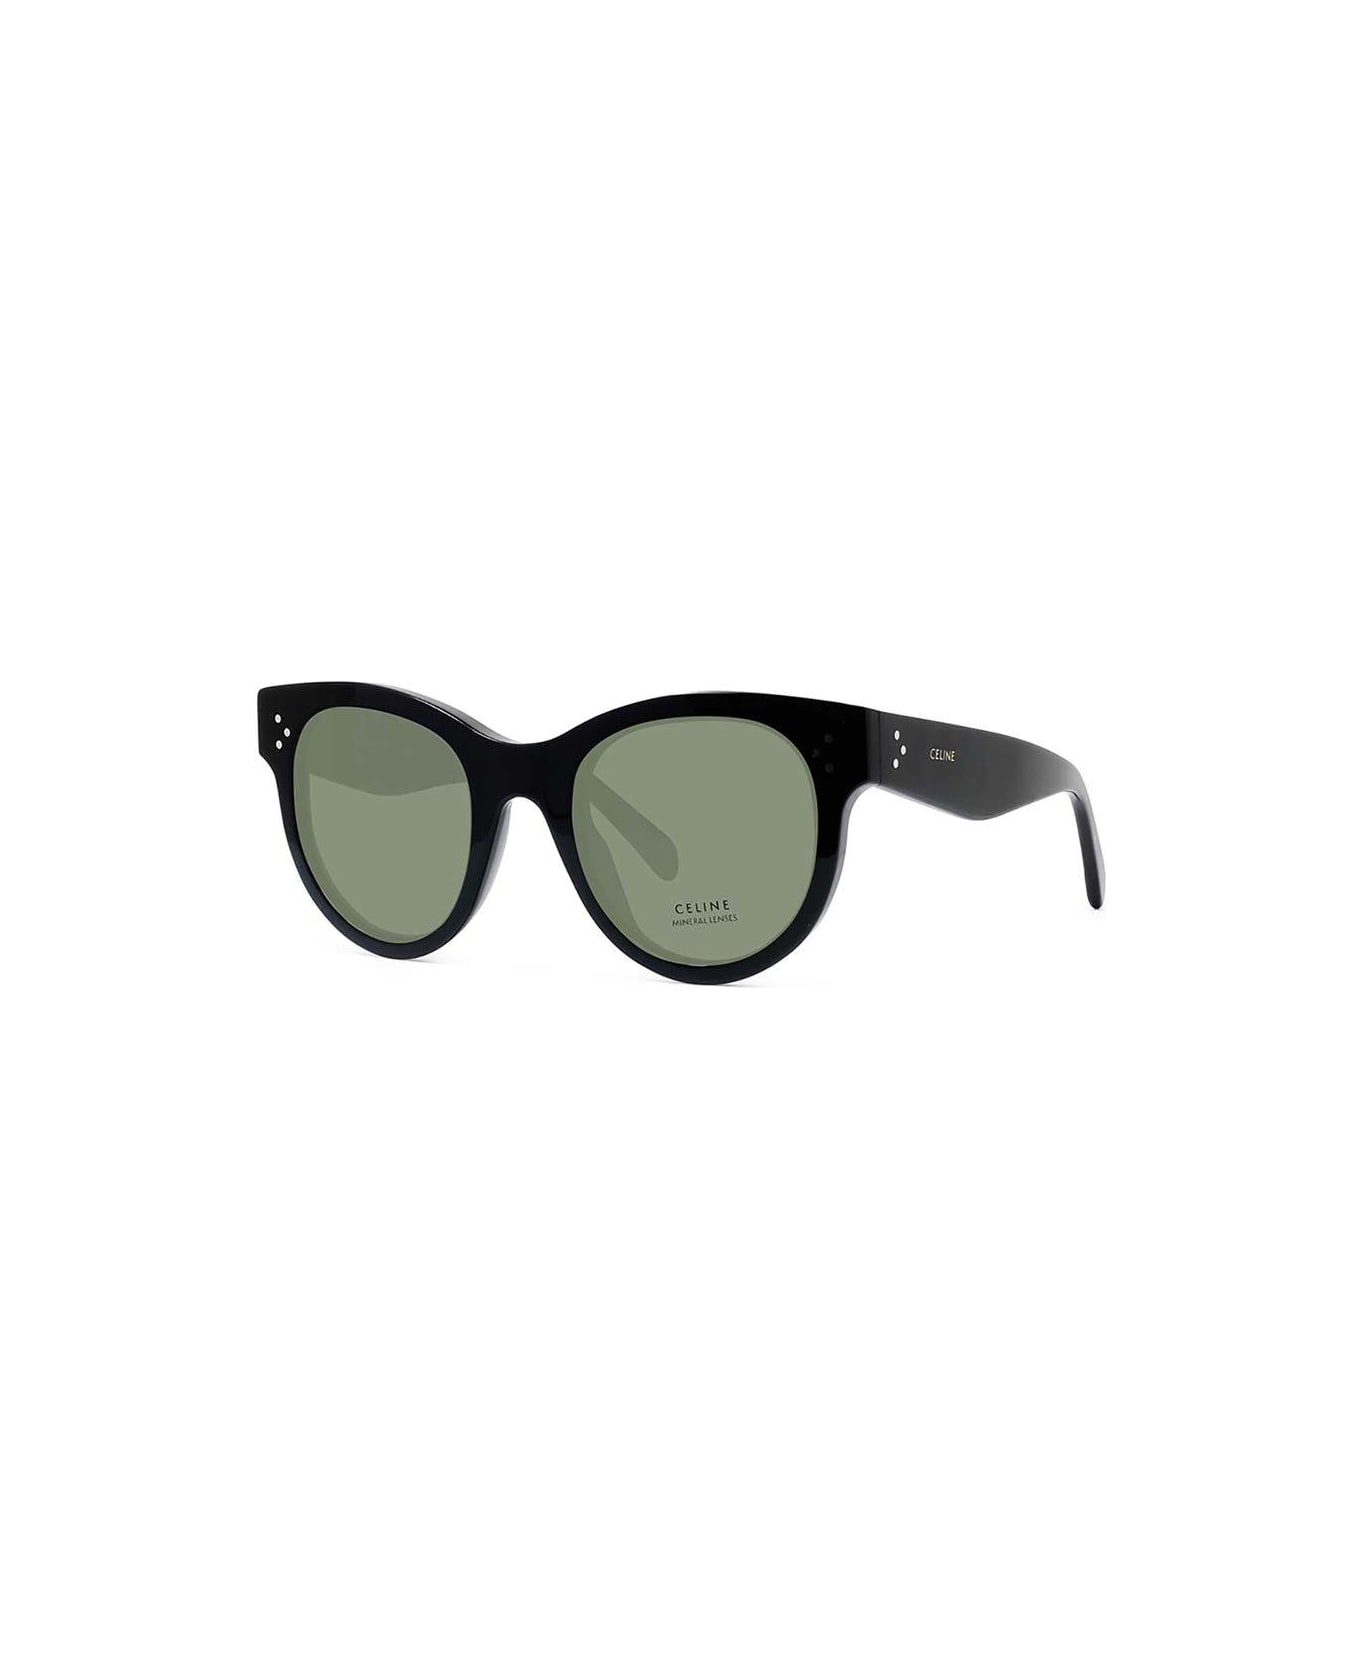 Celine Round Frame Sunglasses - 01a サングラス